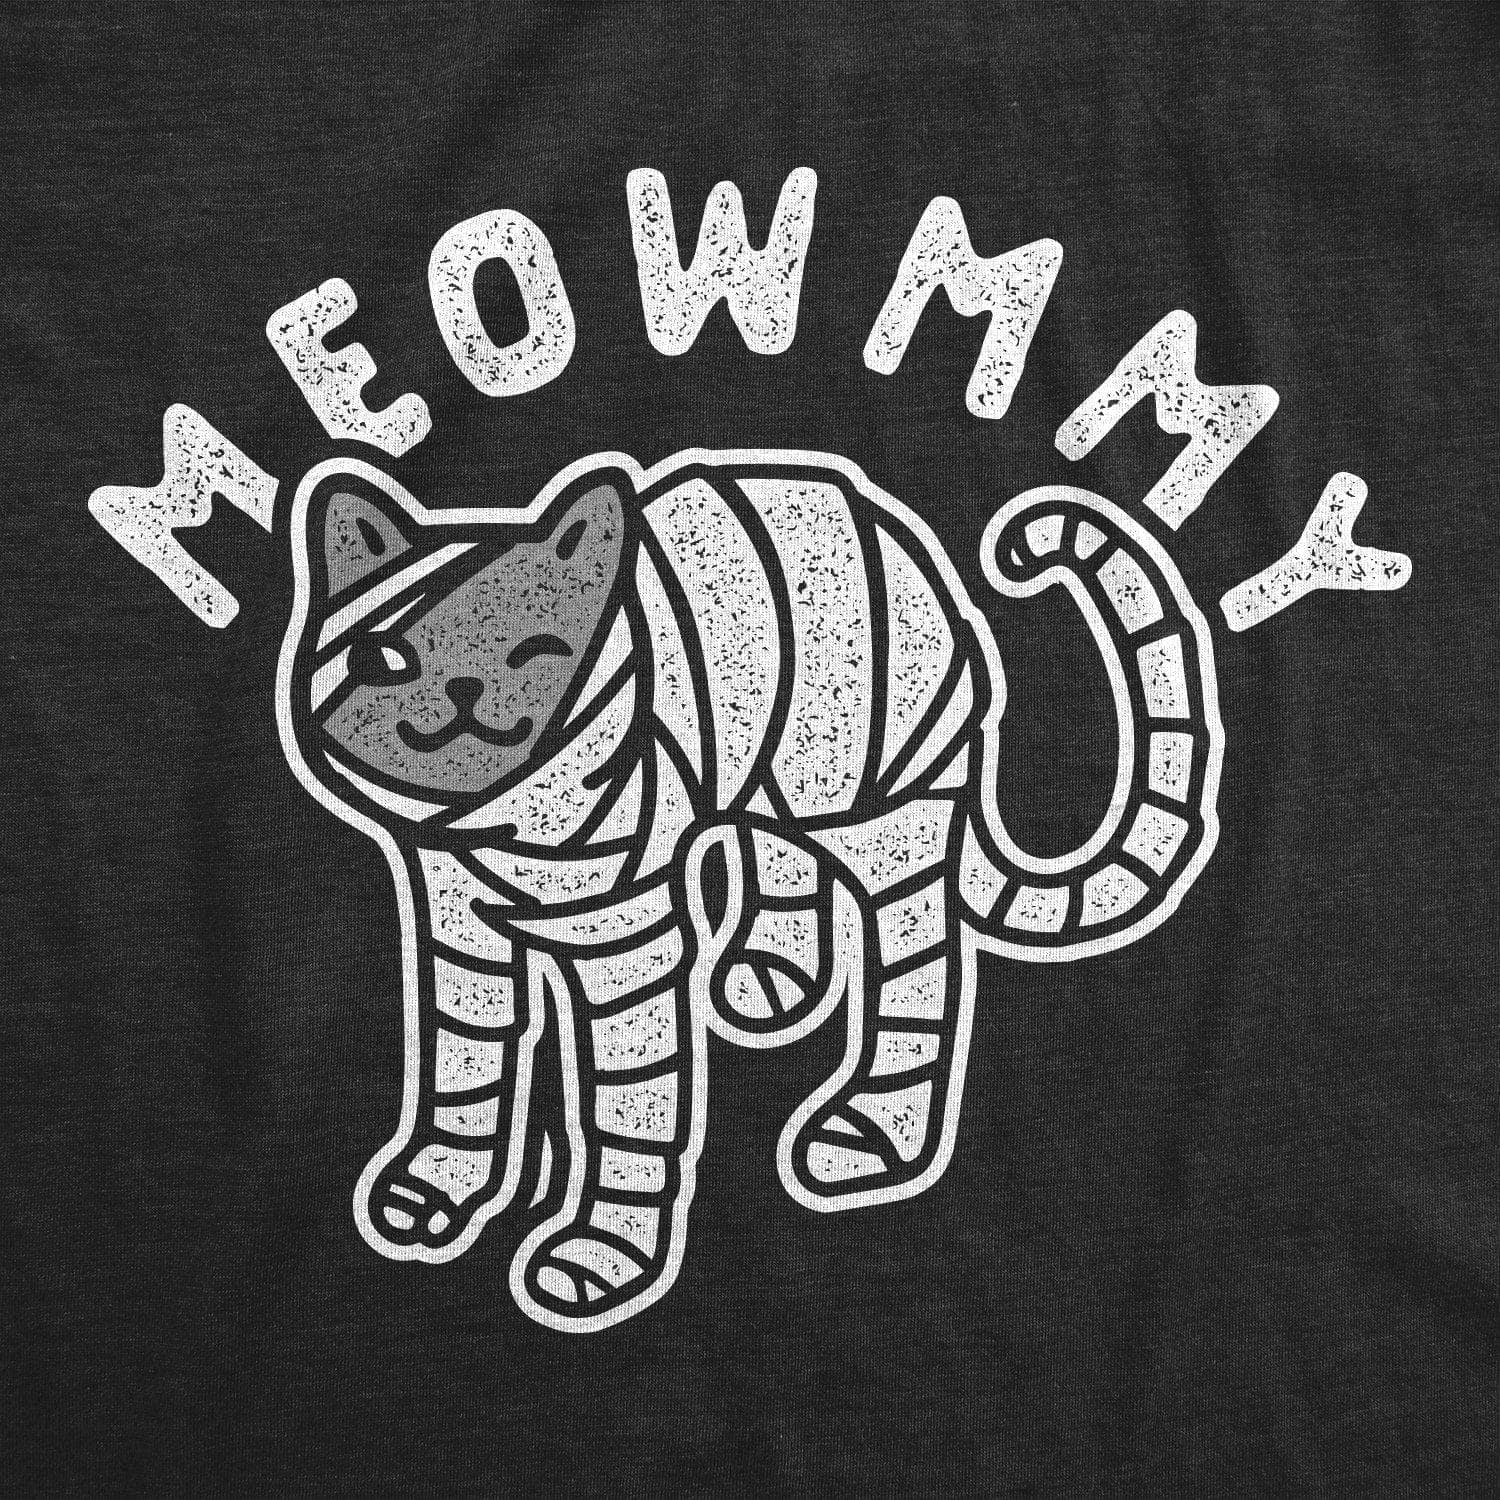 Meowmmy Women's Tshirt - Crazy Dog T-Shirts